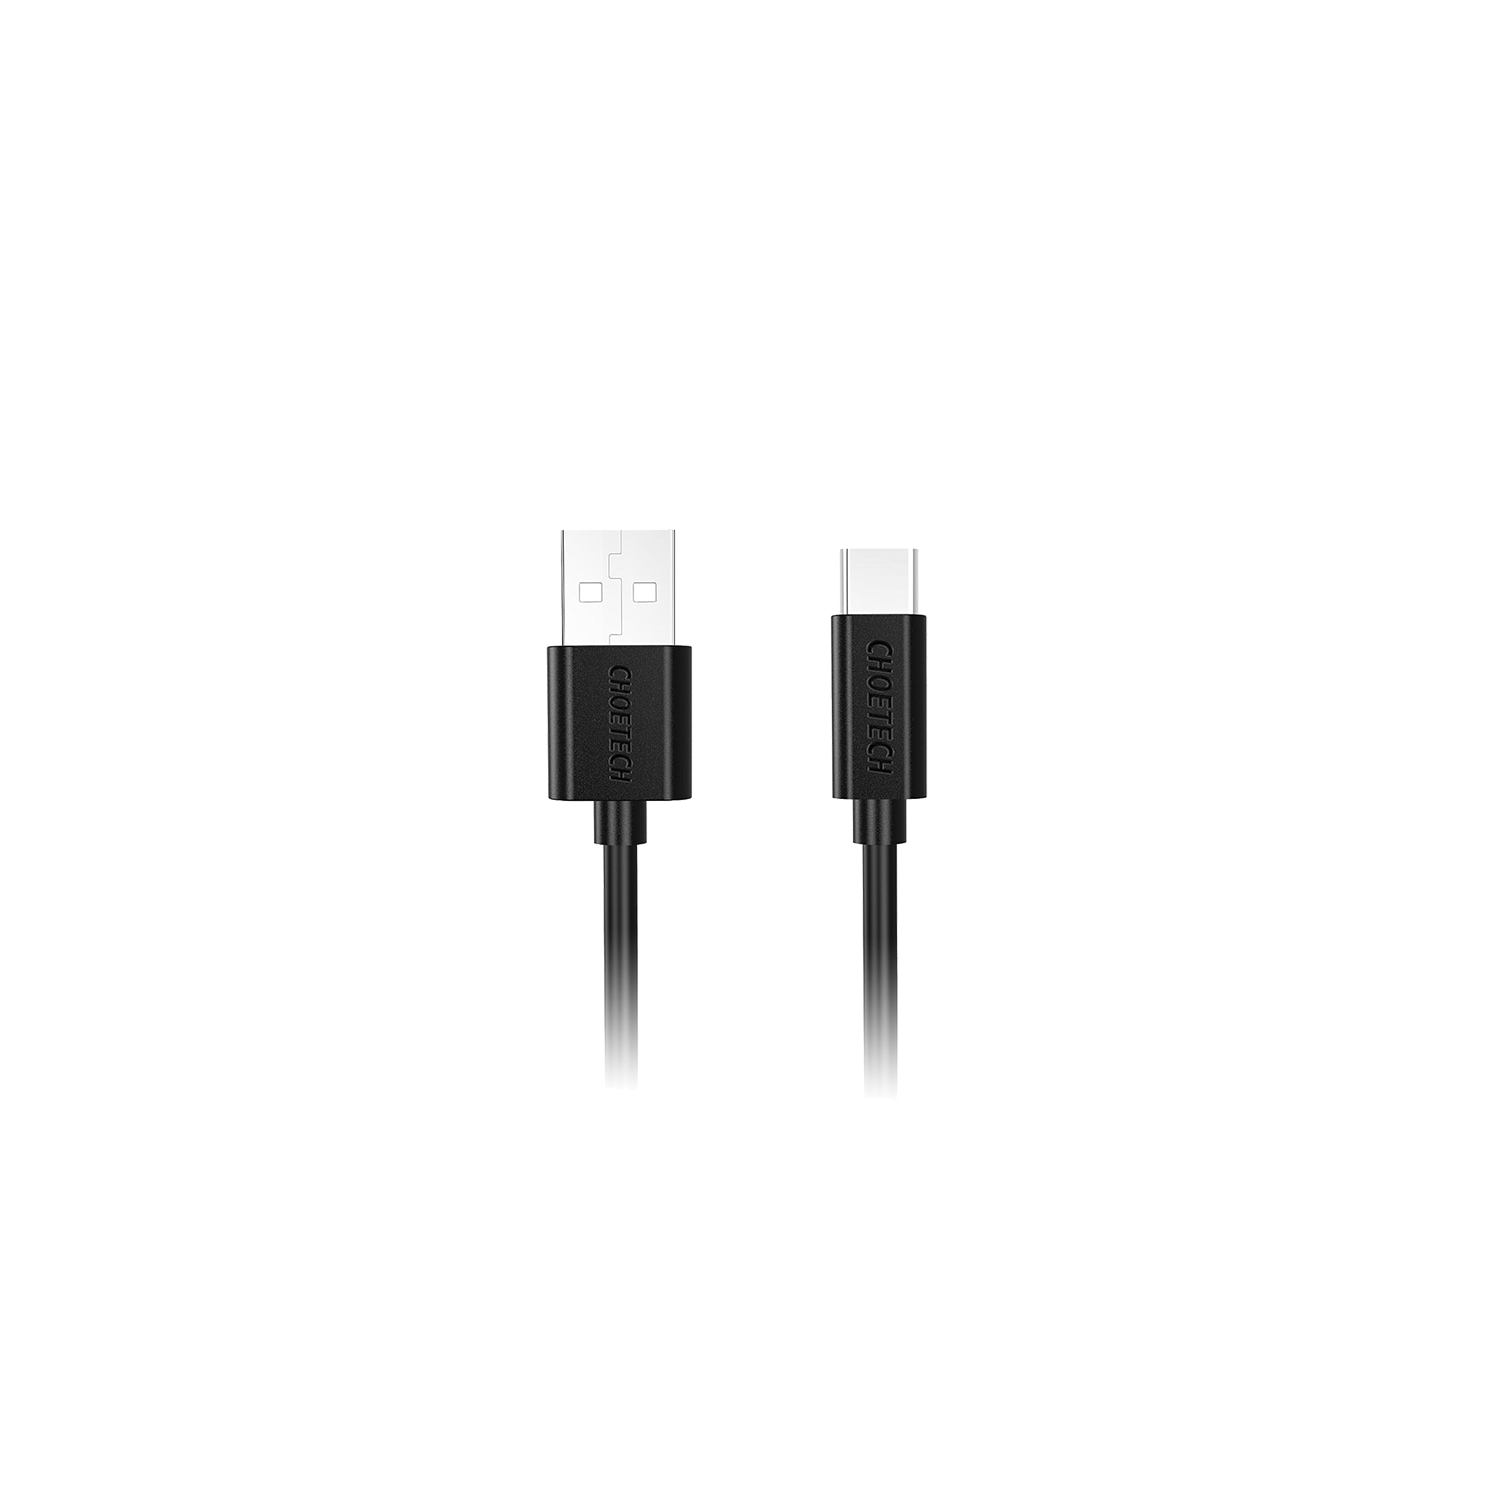 Choetech USB A - USB Type C Cable Black (1m) - (AC0002) - Brand New